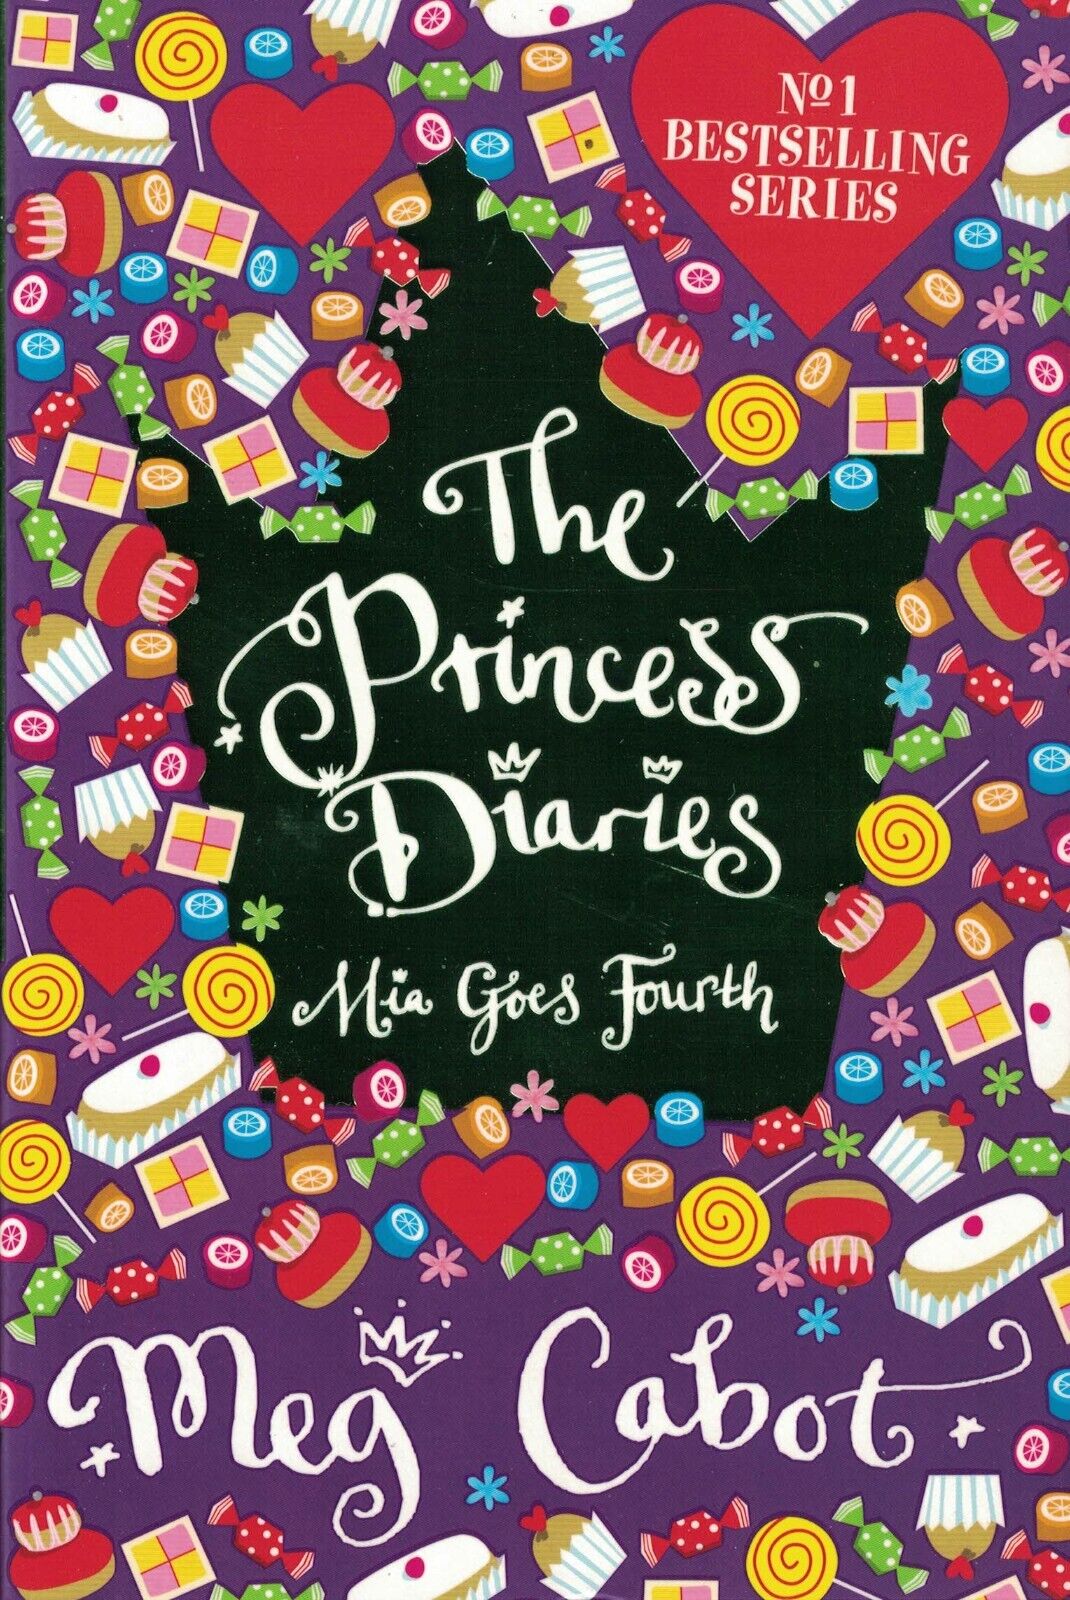 The Princess Diaries: Mia Goes Fourth by Meg Cabot |Attic Books kenya